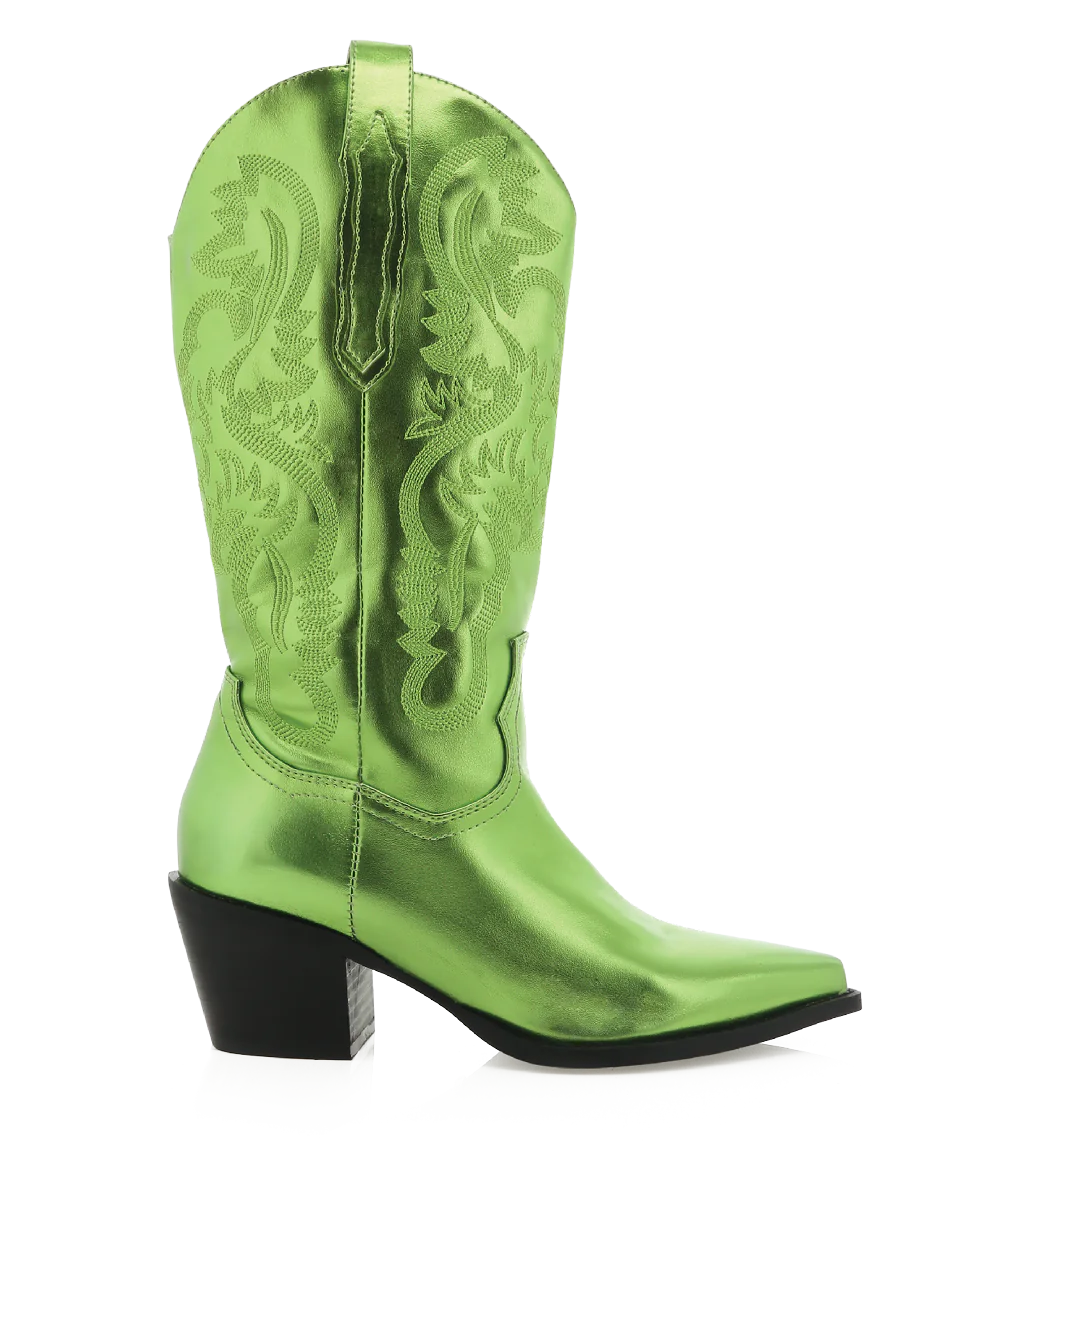 Danilo Boots - Green - Luxxe Apparel